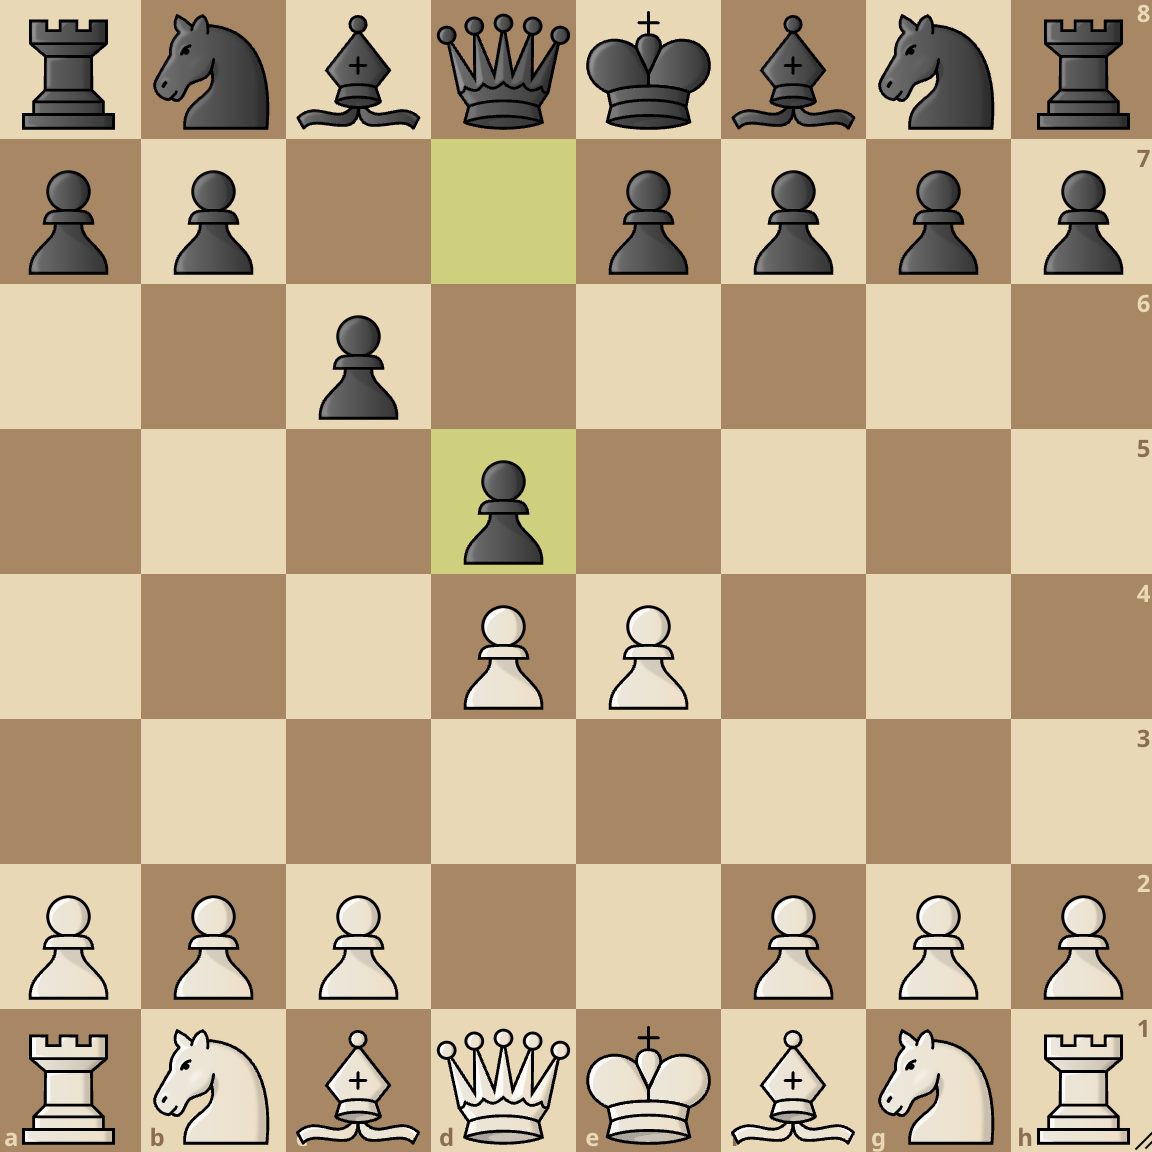 Caro-Kann Defense: 1. e4 c6 2. d4 d5 